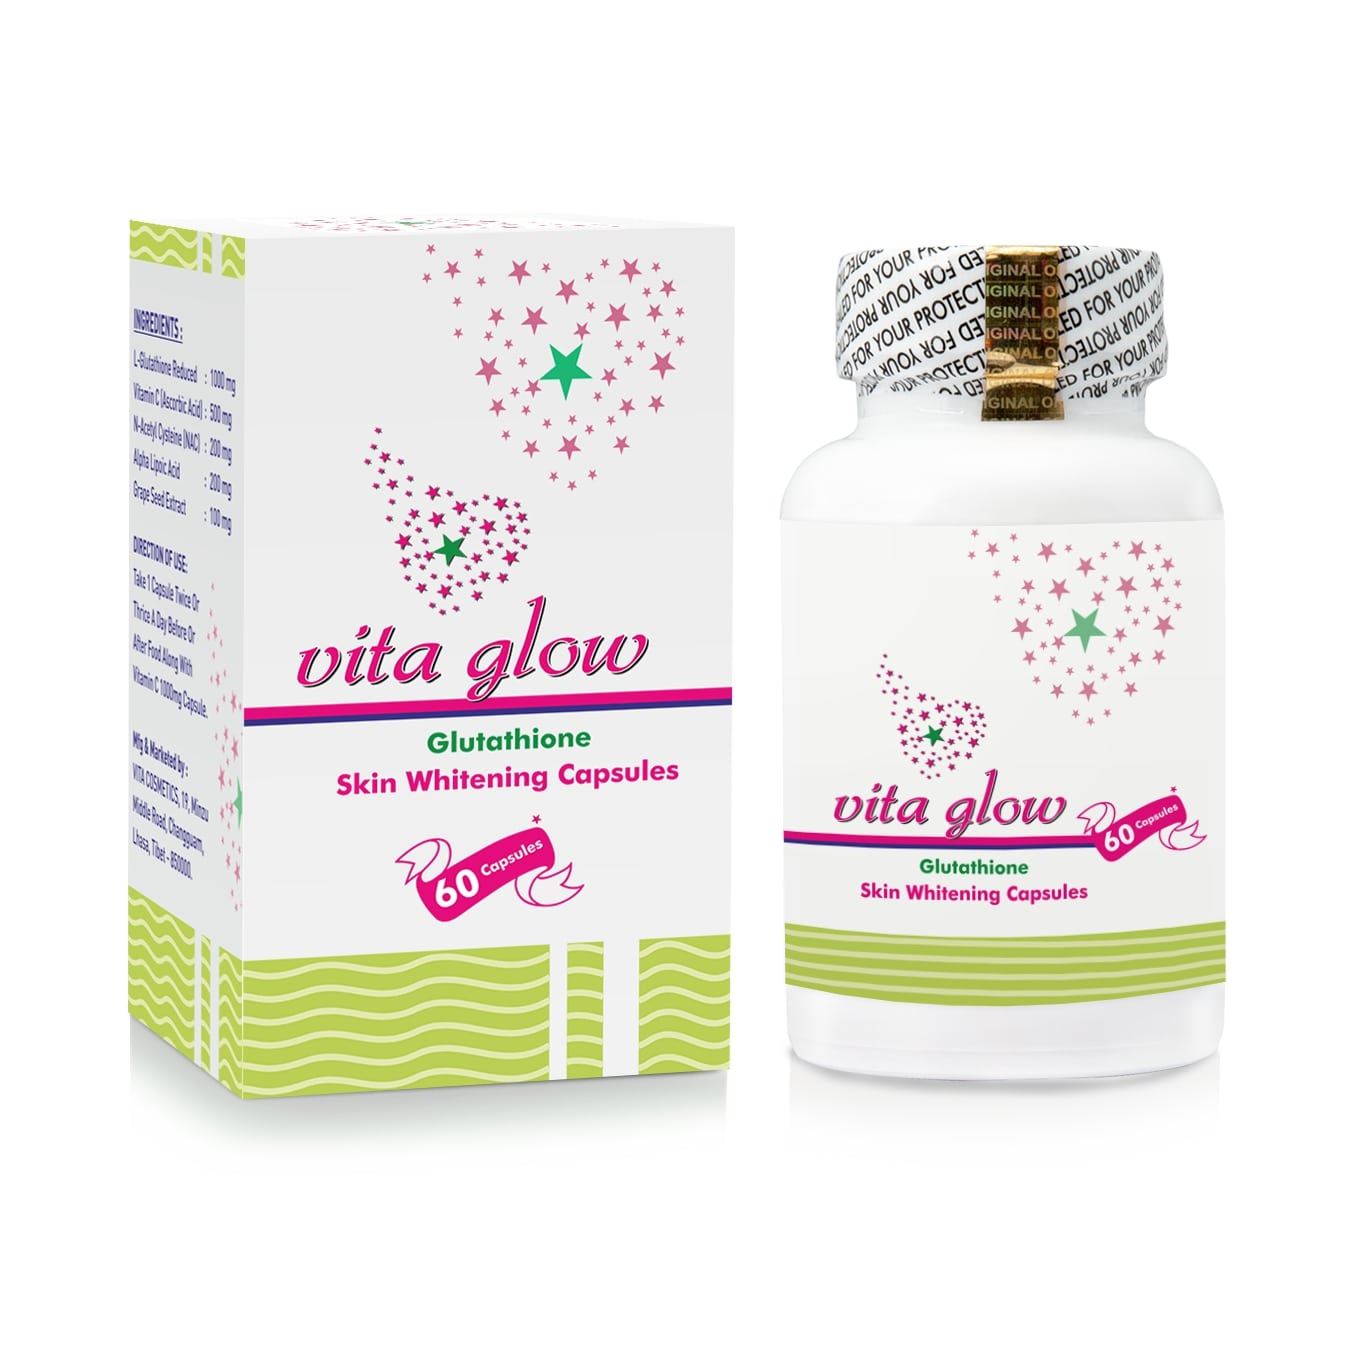 Vita Glow Glutathione Skin Whitening Capsules reviews